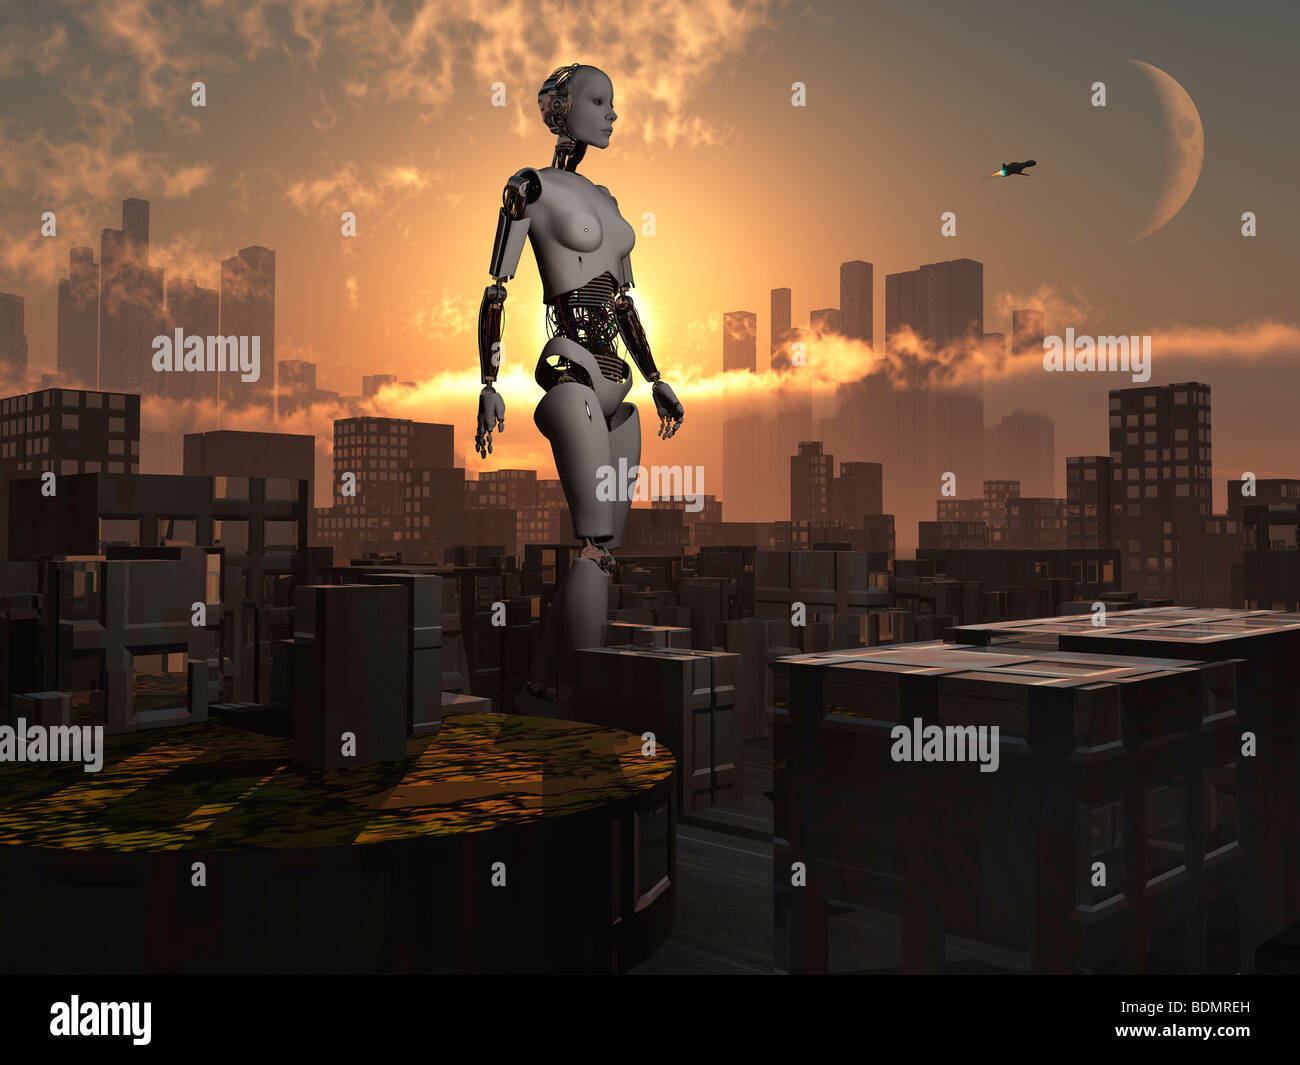 A female Android exploring a futuristic city. Stock Photo